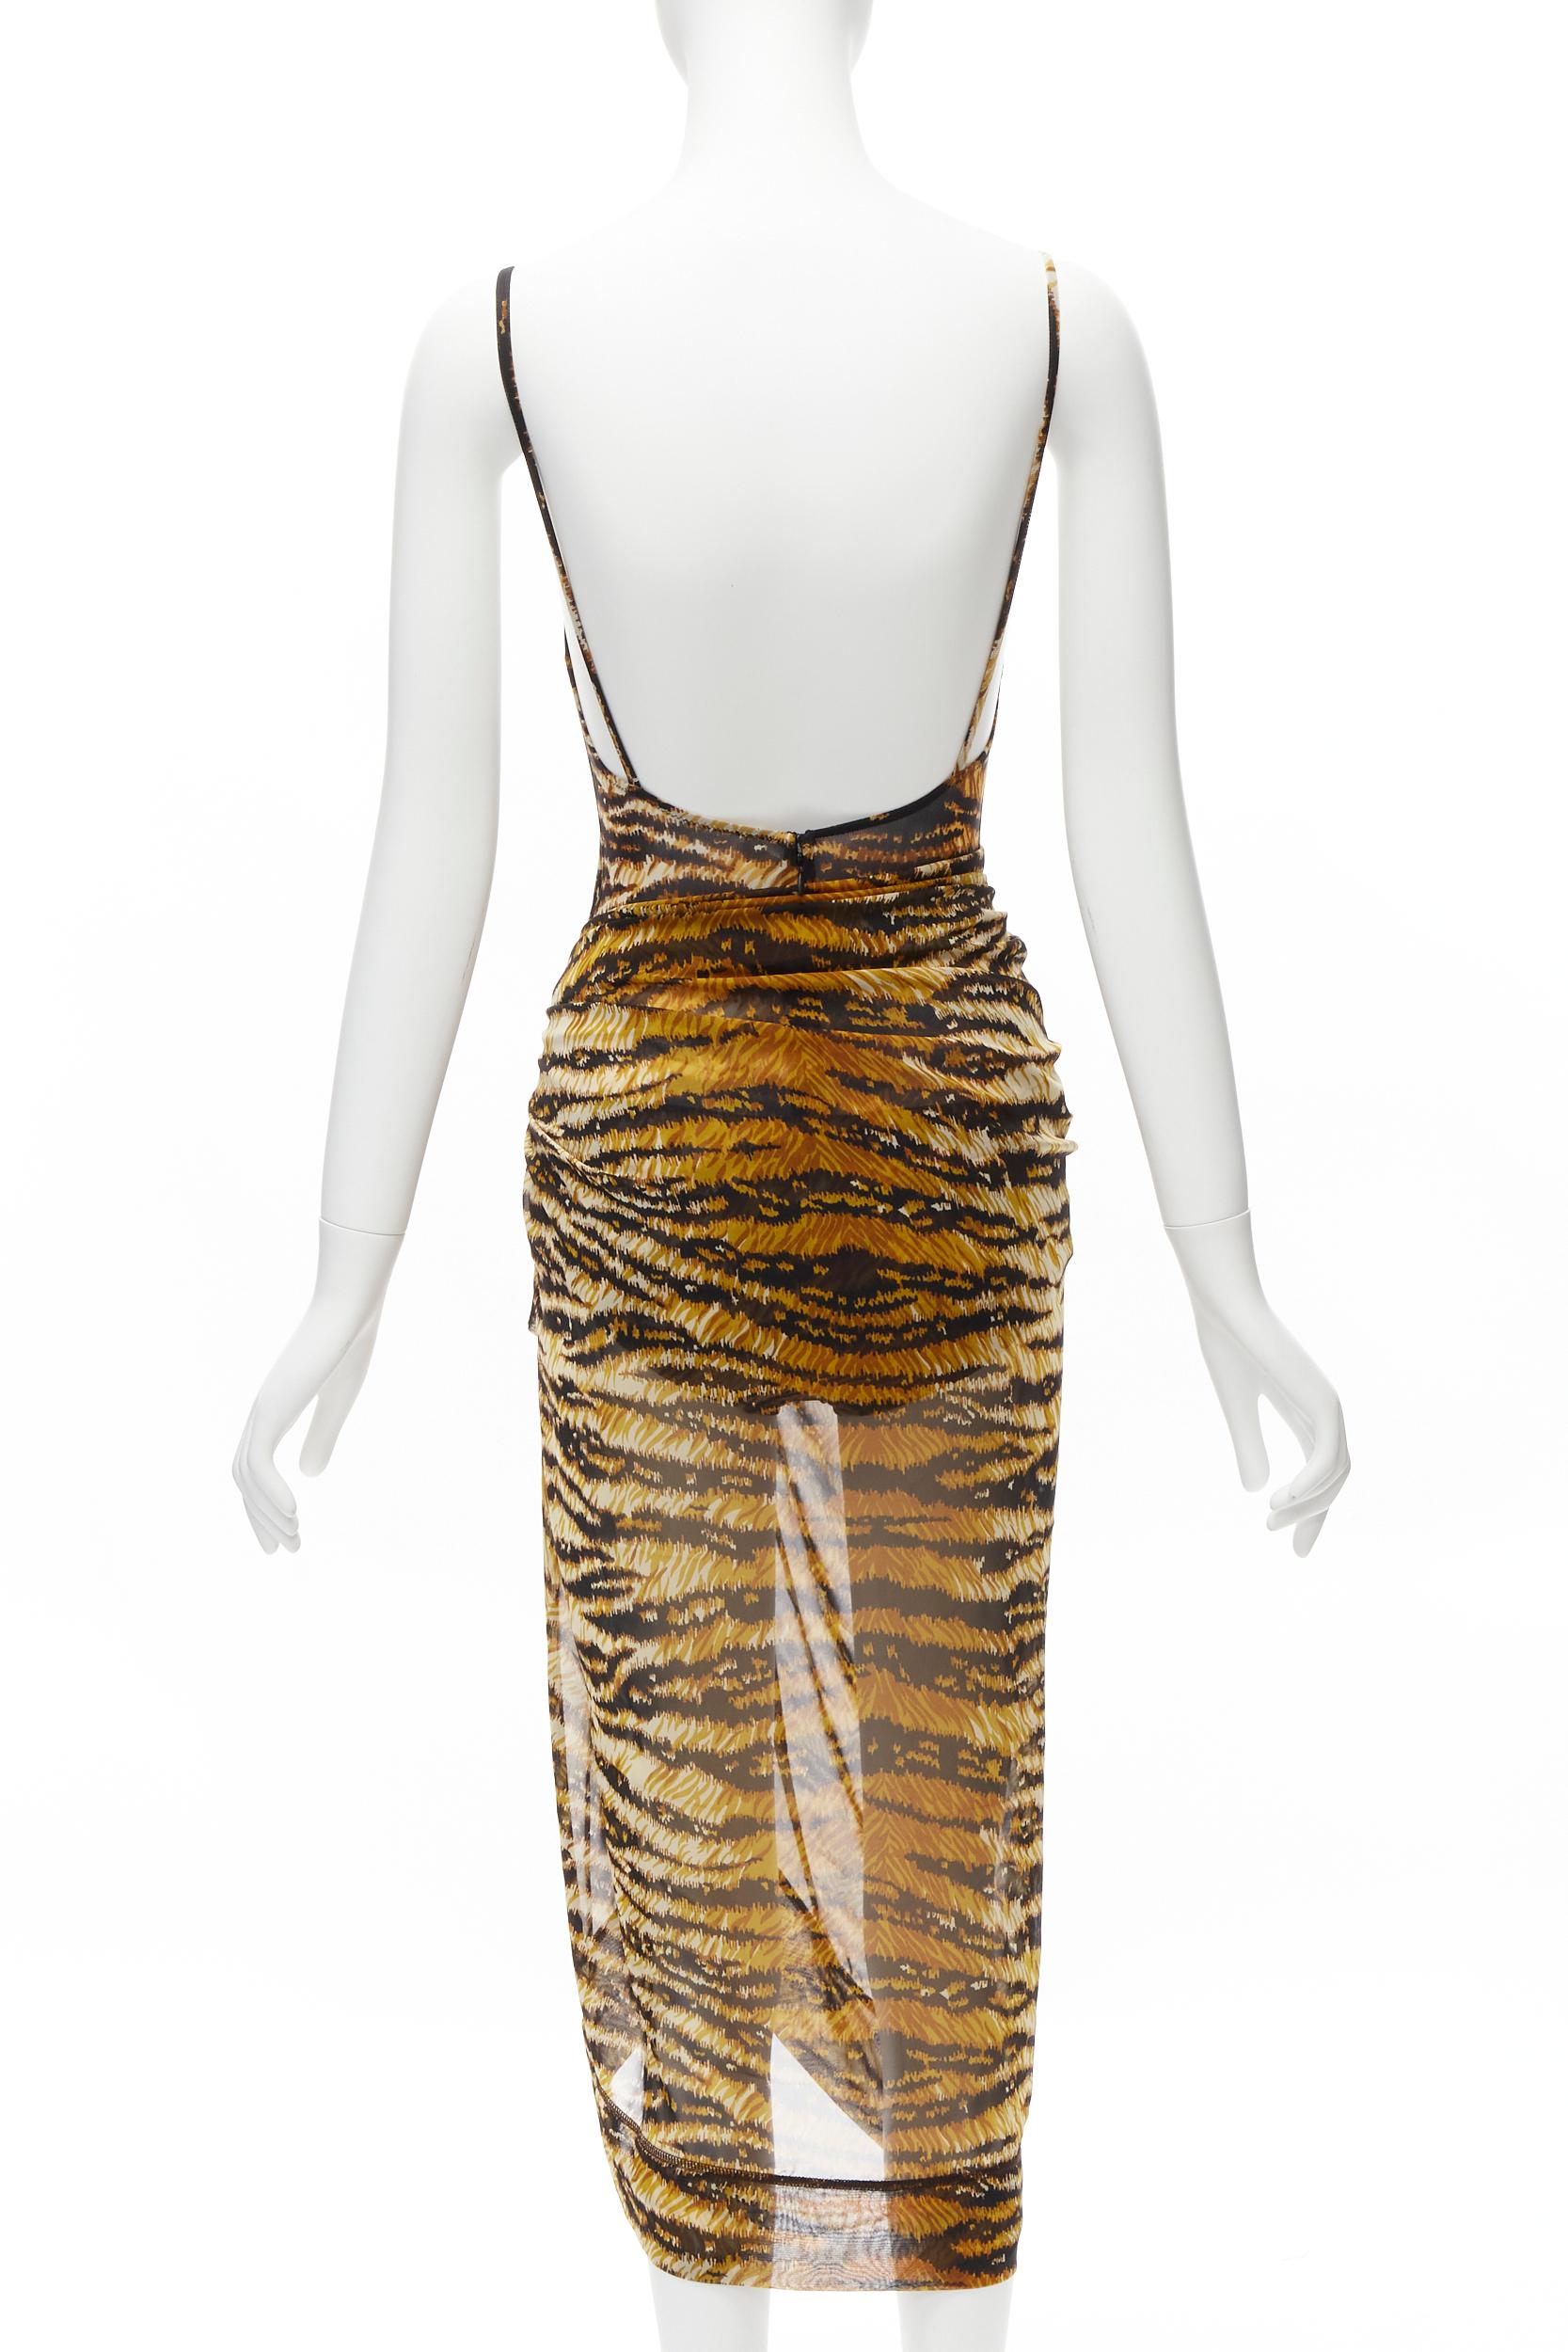 DOLCE GABBANA MARE Vintage tiger print mesh bustier bodysuit wrap skirt scarf S 7